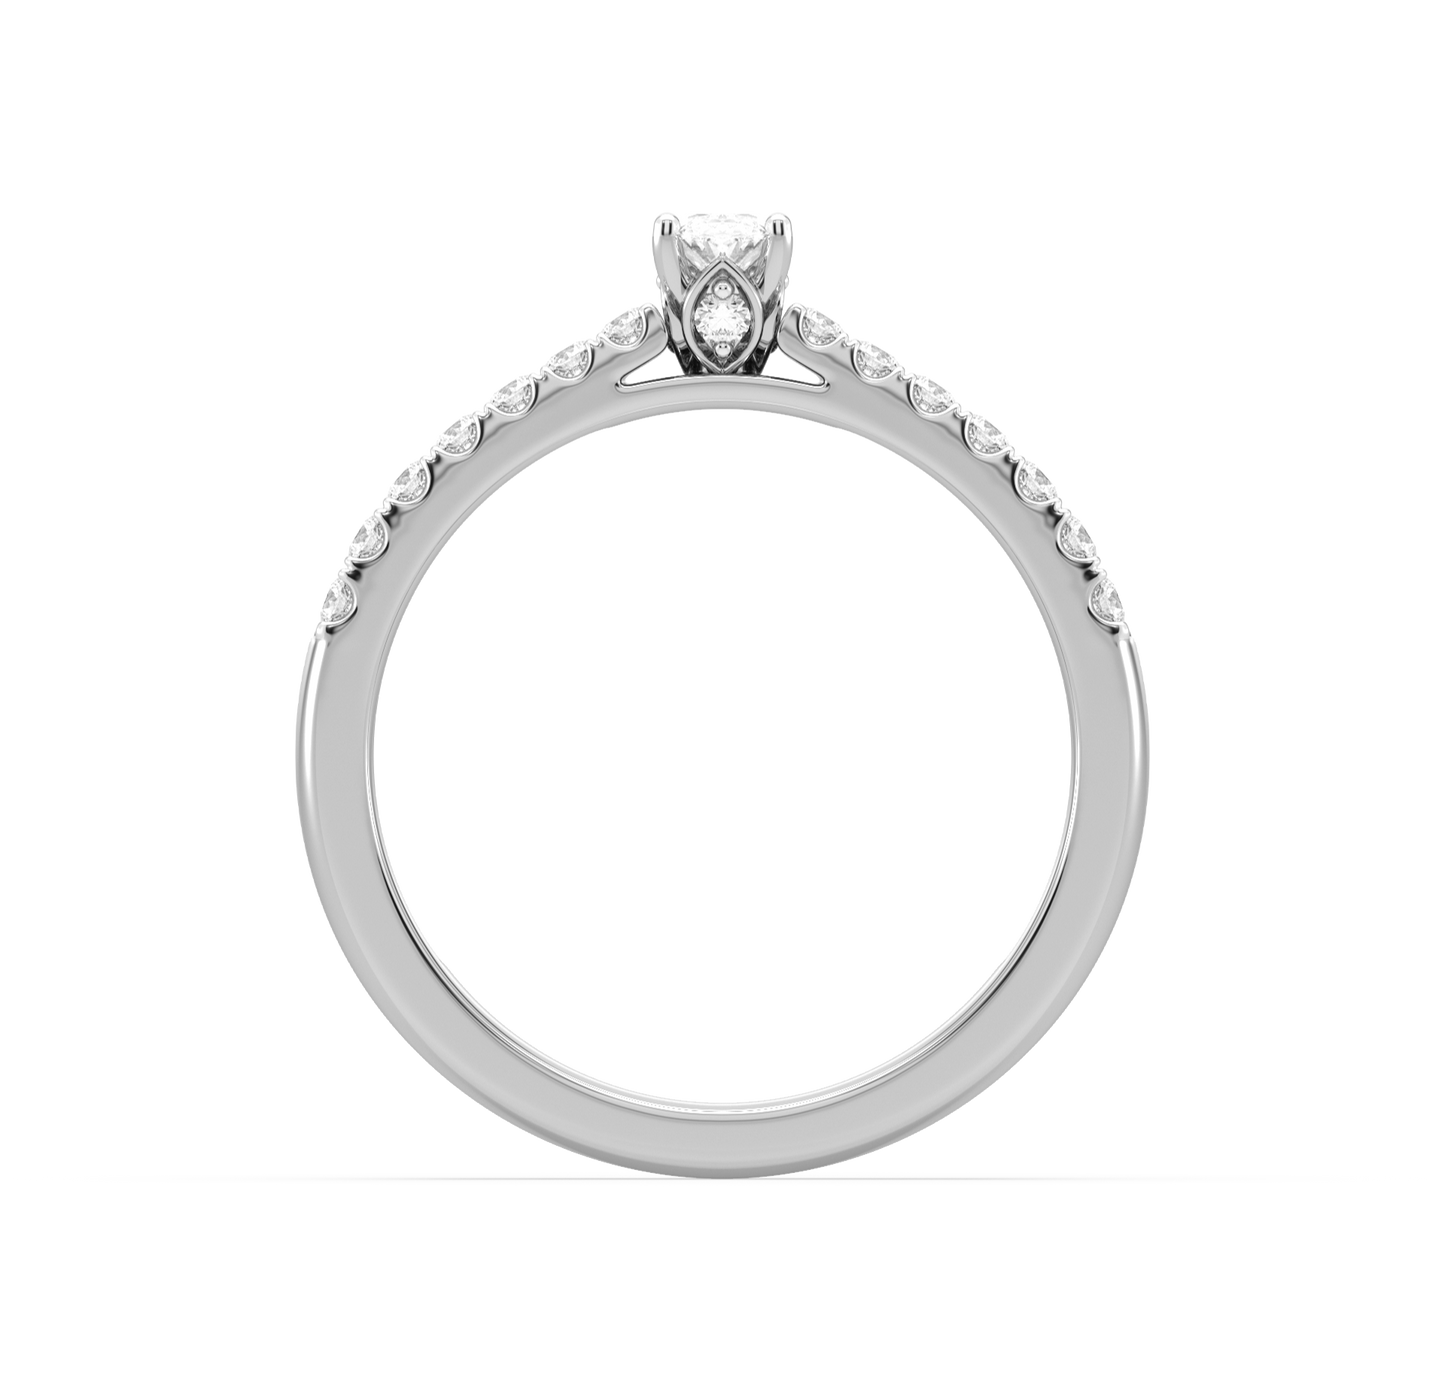 Customised ring RG21010-PH21025